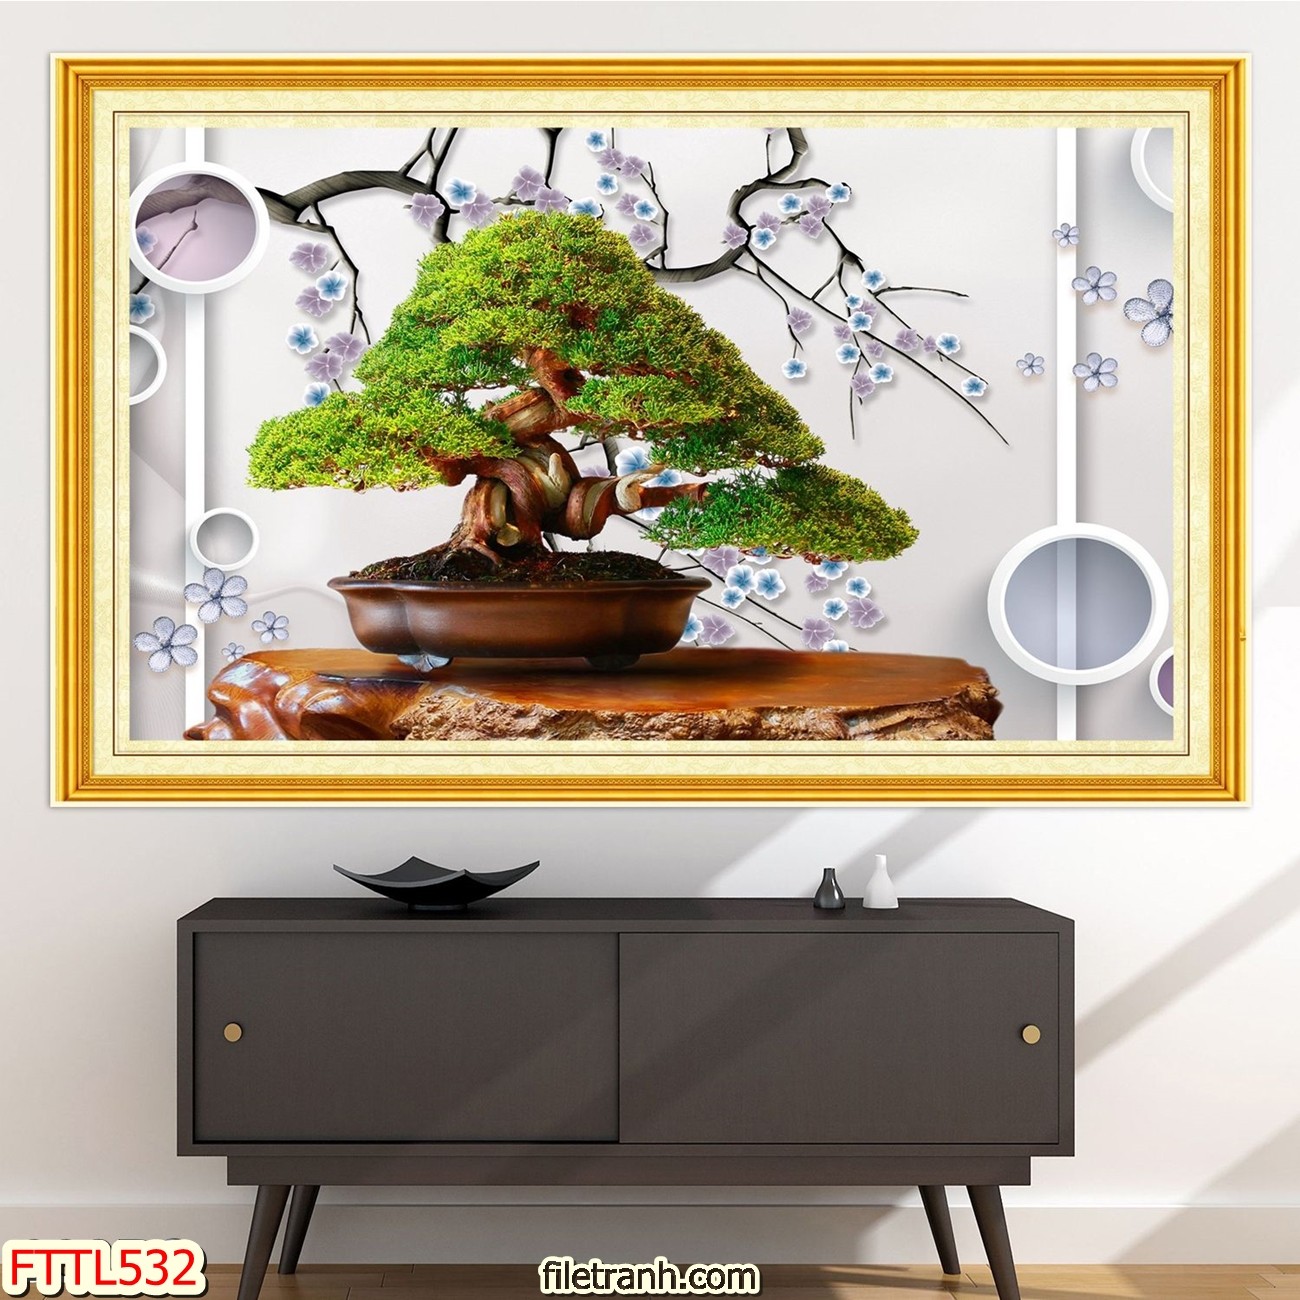 https://filetranh.com/file-tranh-chau-mai-bonsai/file-tranh-chau-mai-bonsai-fttl532.html